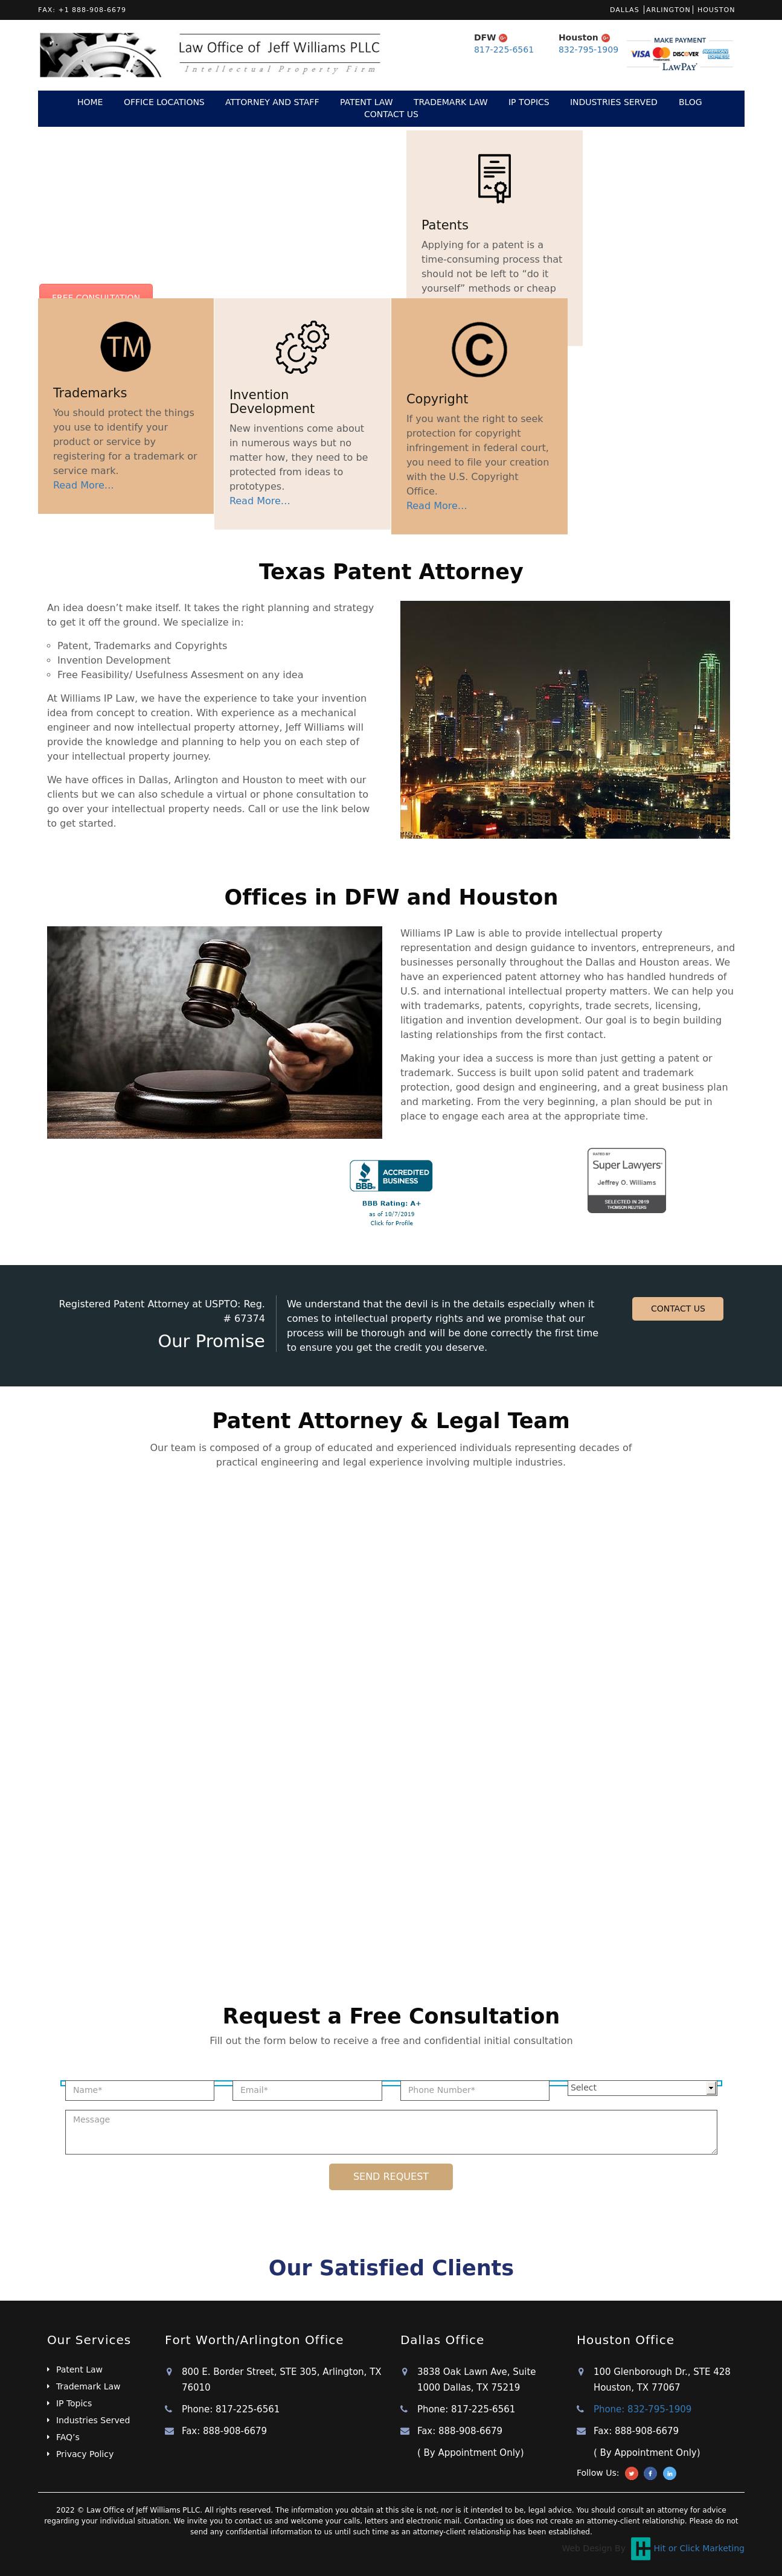 Law Office of Jeff Williams PLLC - Arlington TX Lawyers